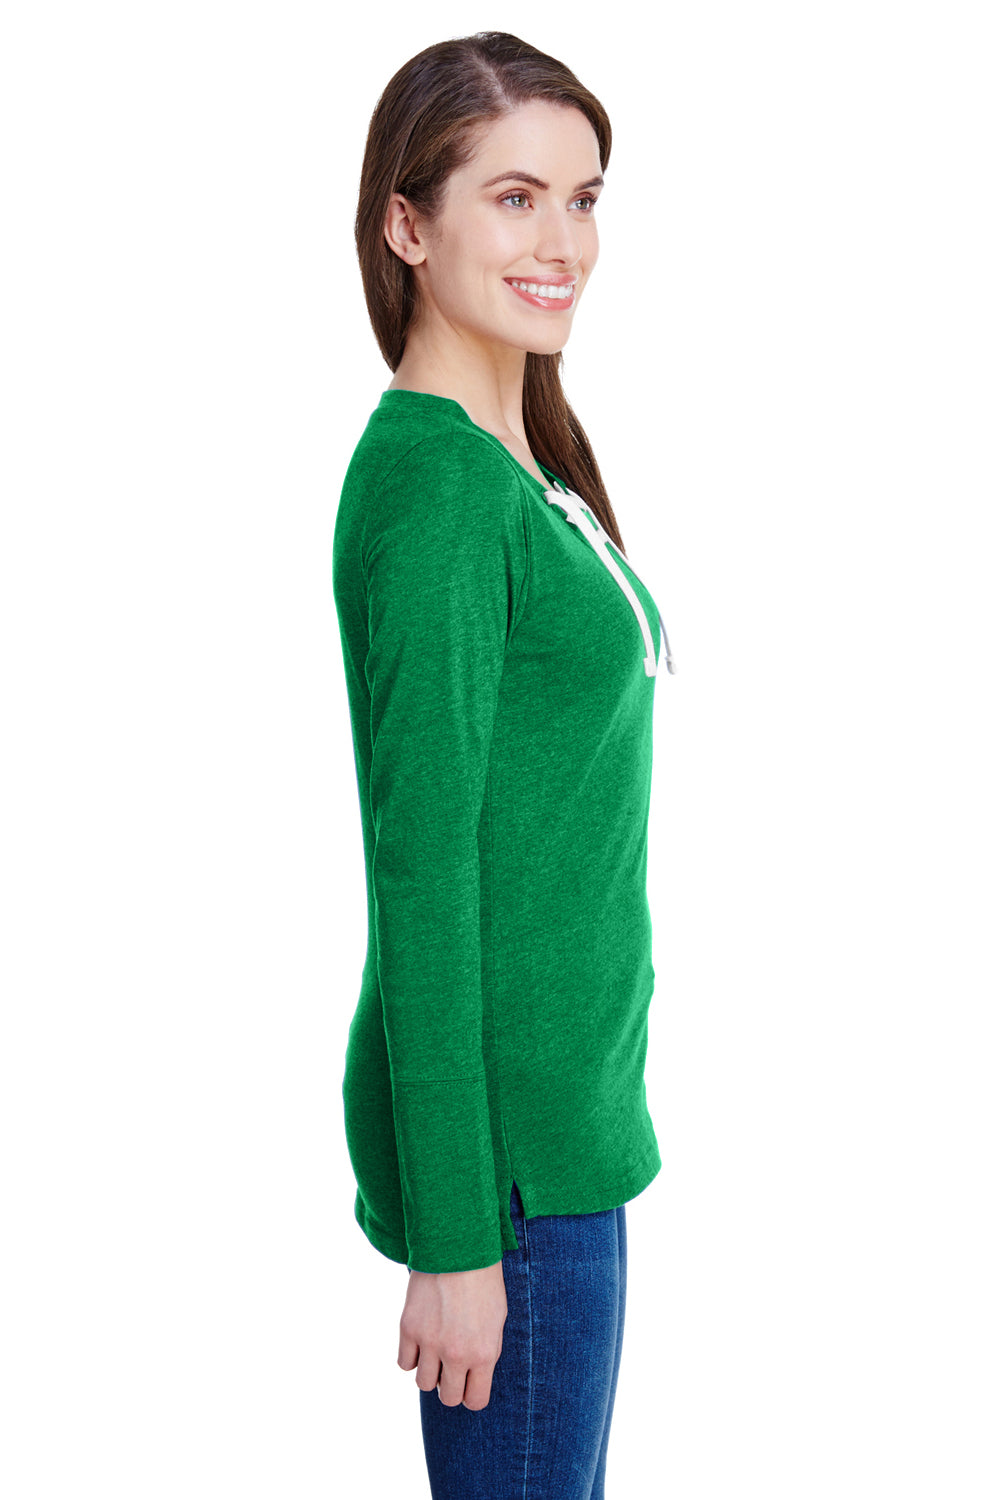 LAT LA3538 Womens Fine Jersey Lace Up Long Sleeve V-Neck T-Shirt Kelly Green Side